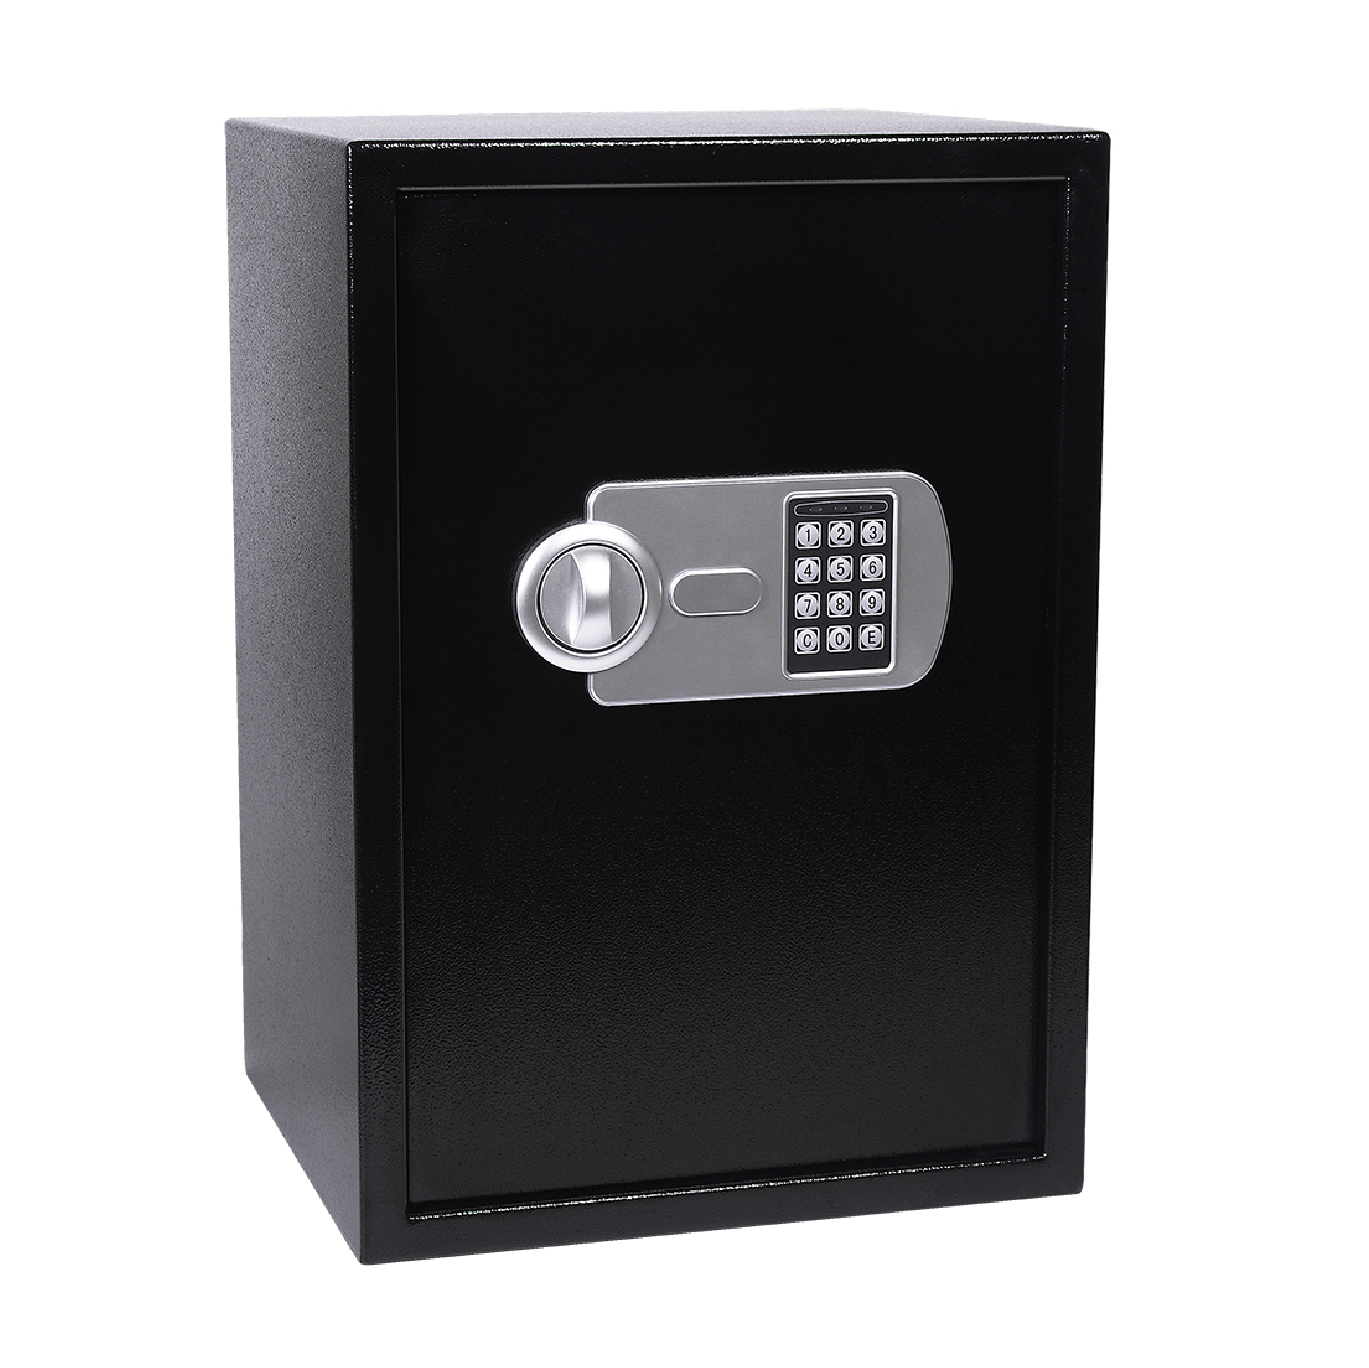 Lock Well Electronic Safe, Digital Lock With 3 Led Indicators, Blackcolors, 50EL